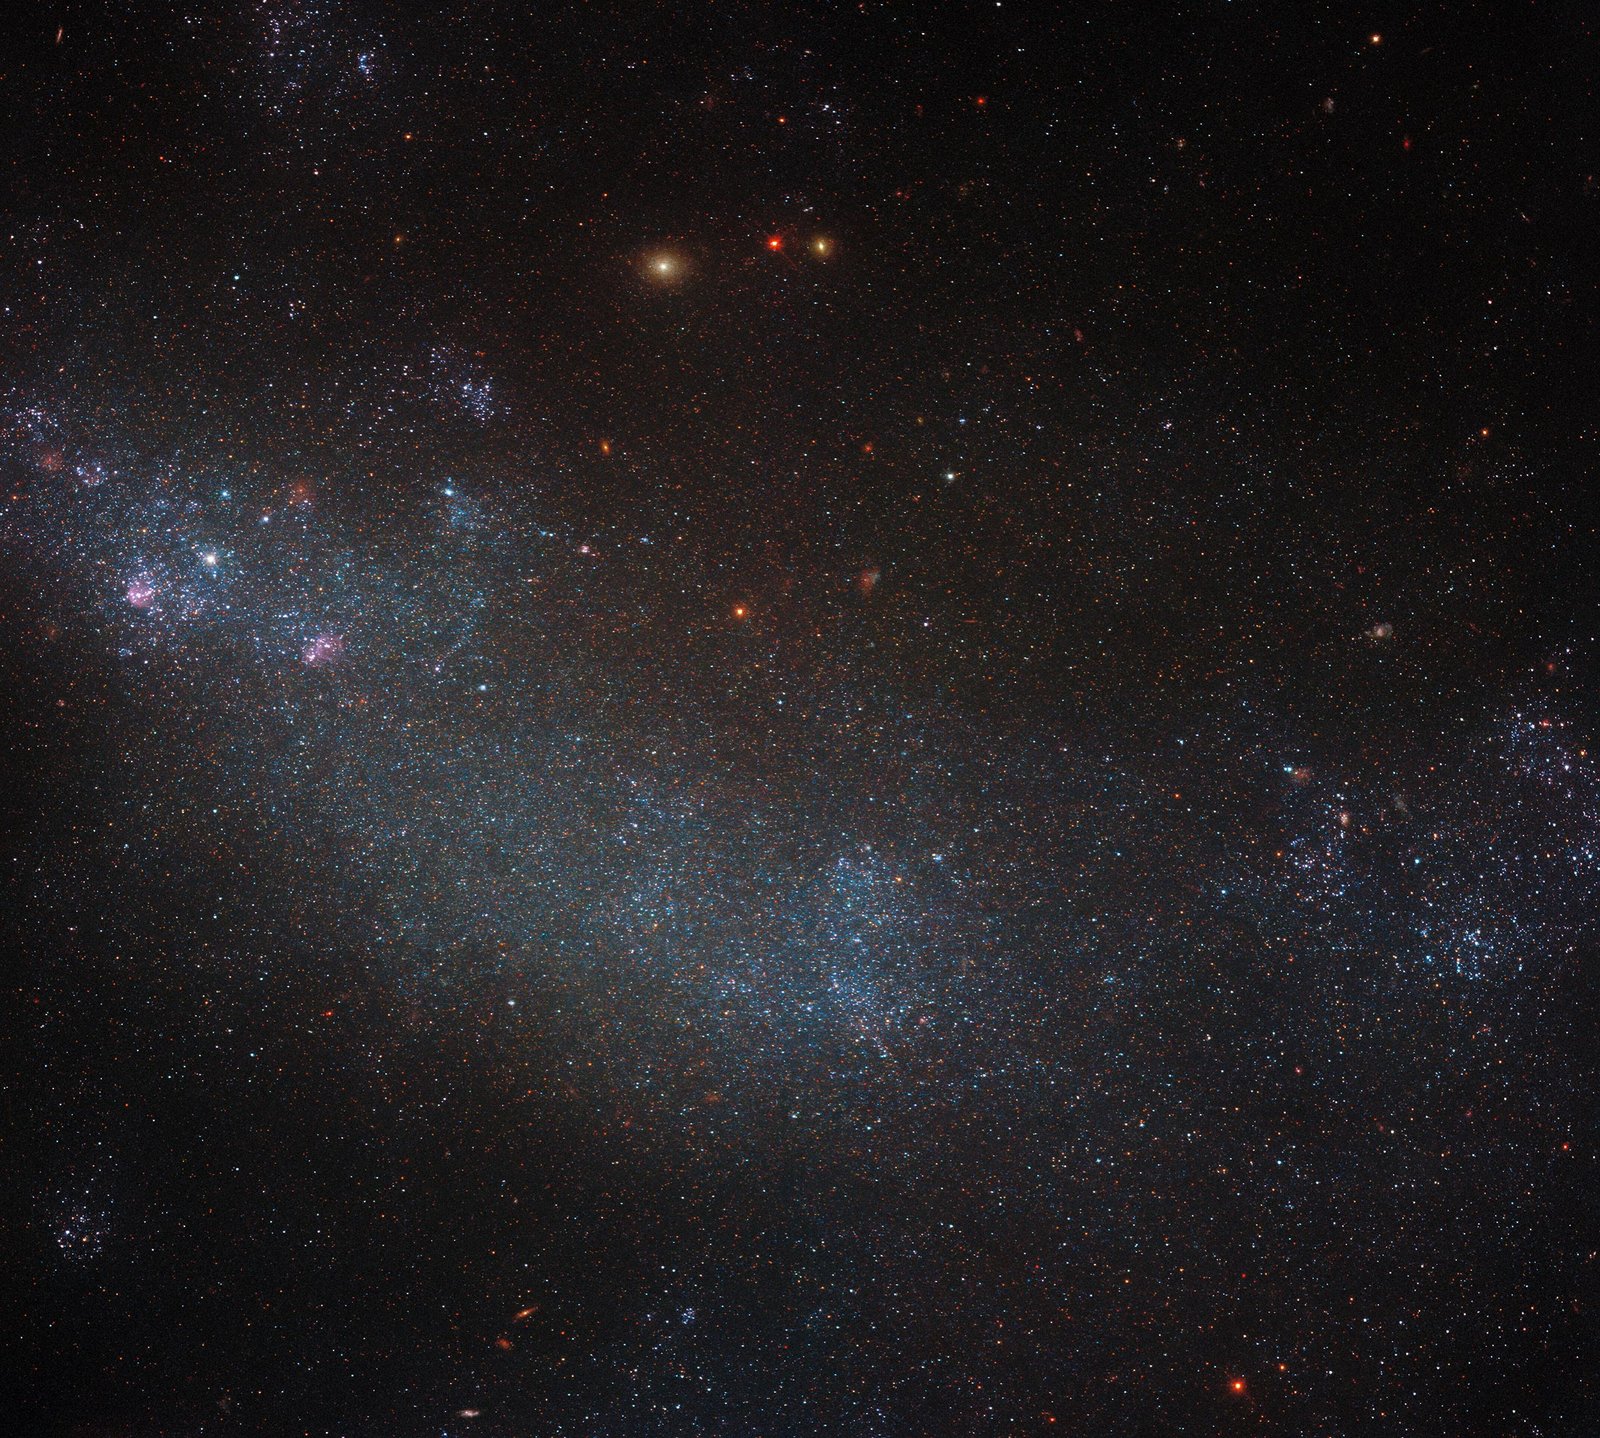 An Unusual Galaxy Hiding in Plain Sight